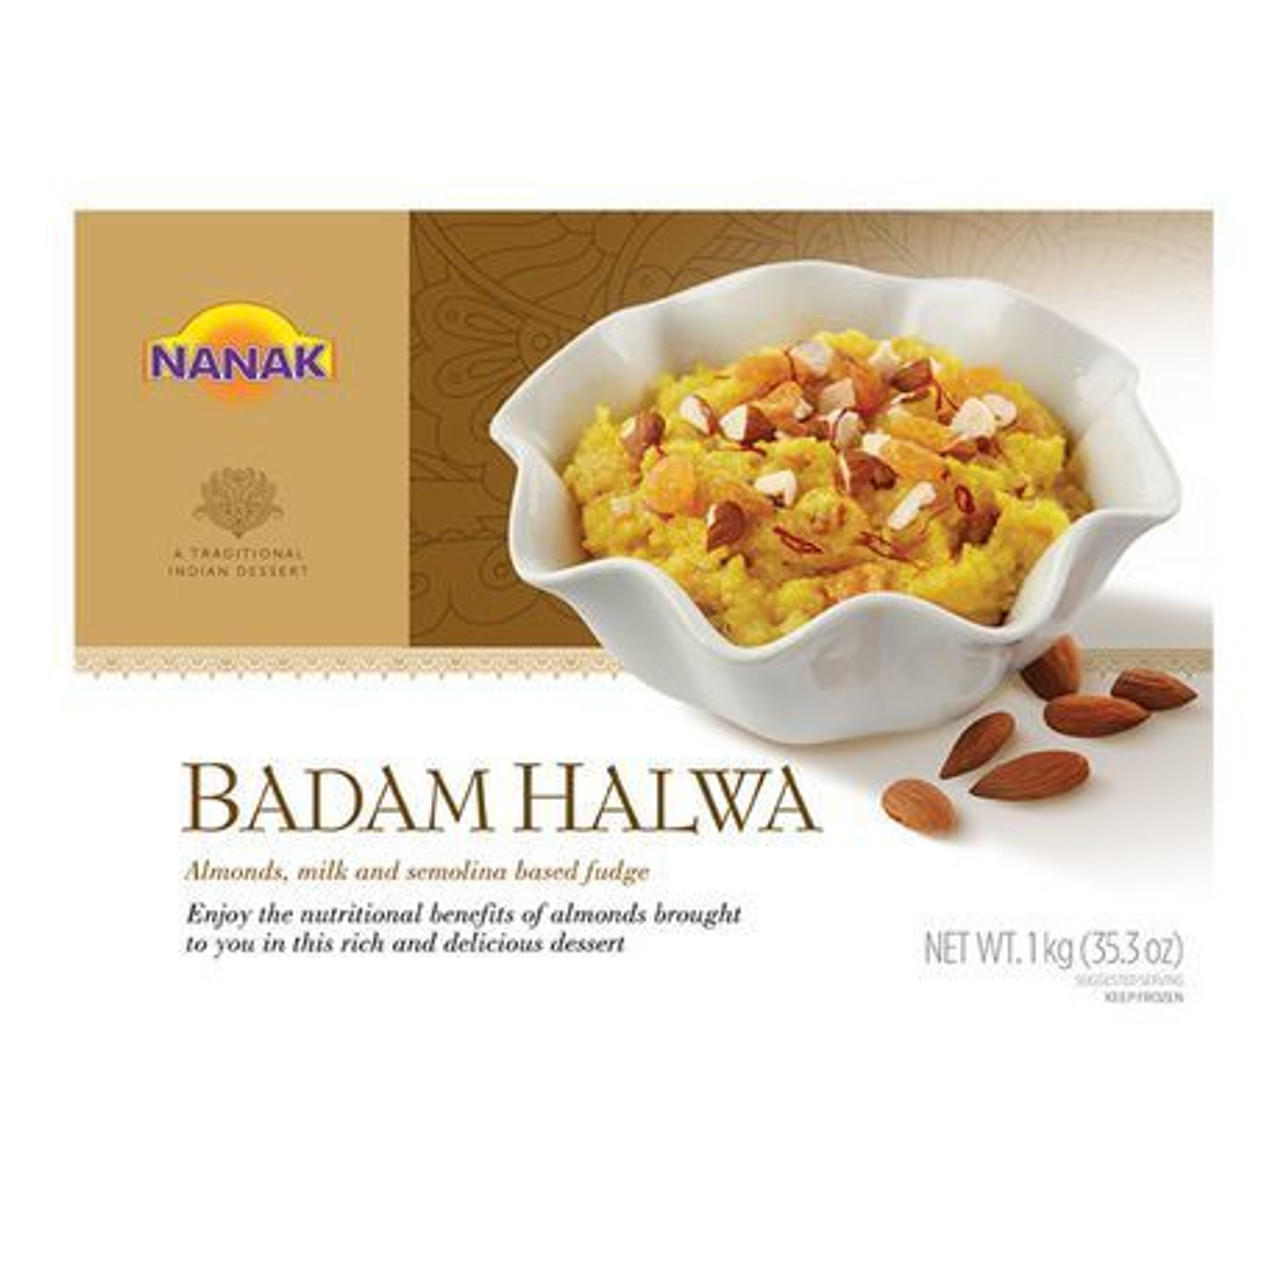 http://atiyasfreshfarm.com/public/storage/photos/1/Products 6/Nanak Badam Halwa 1kg.jpg